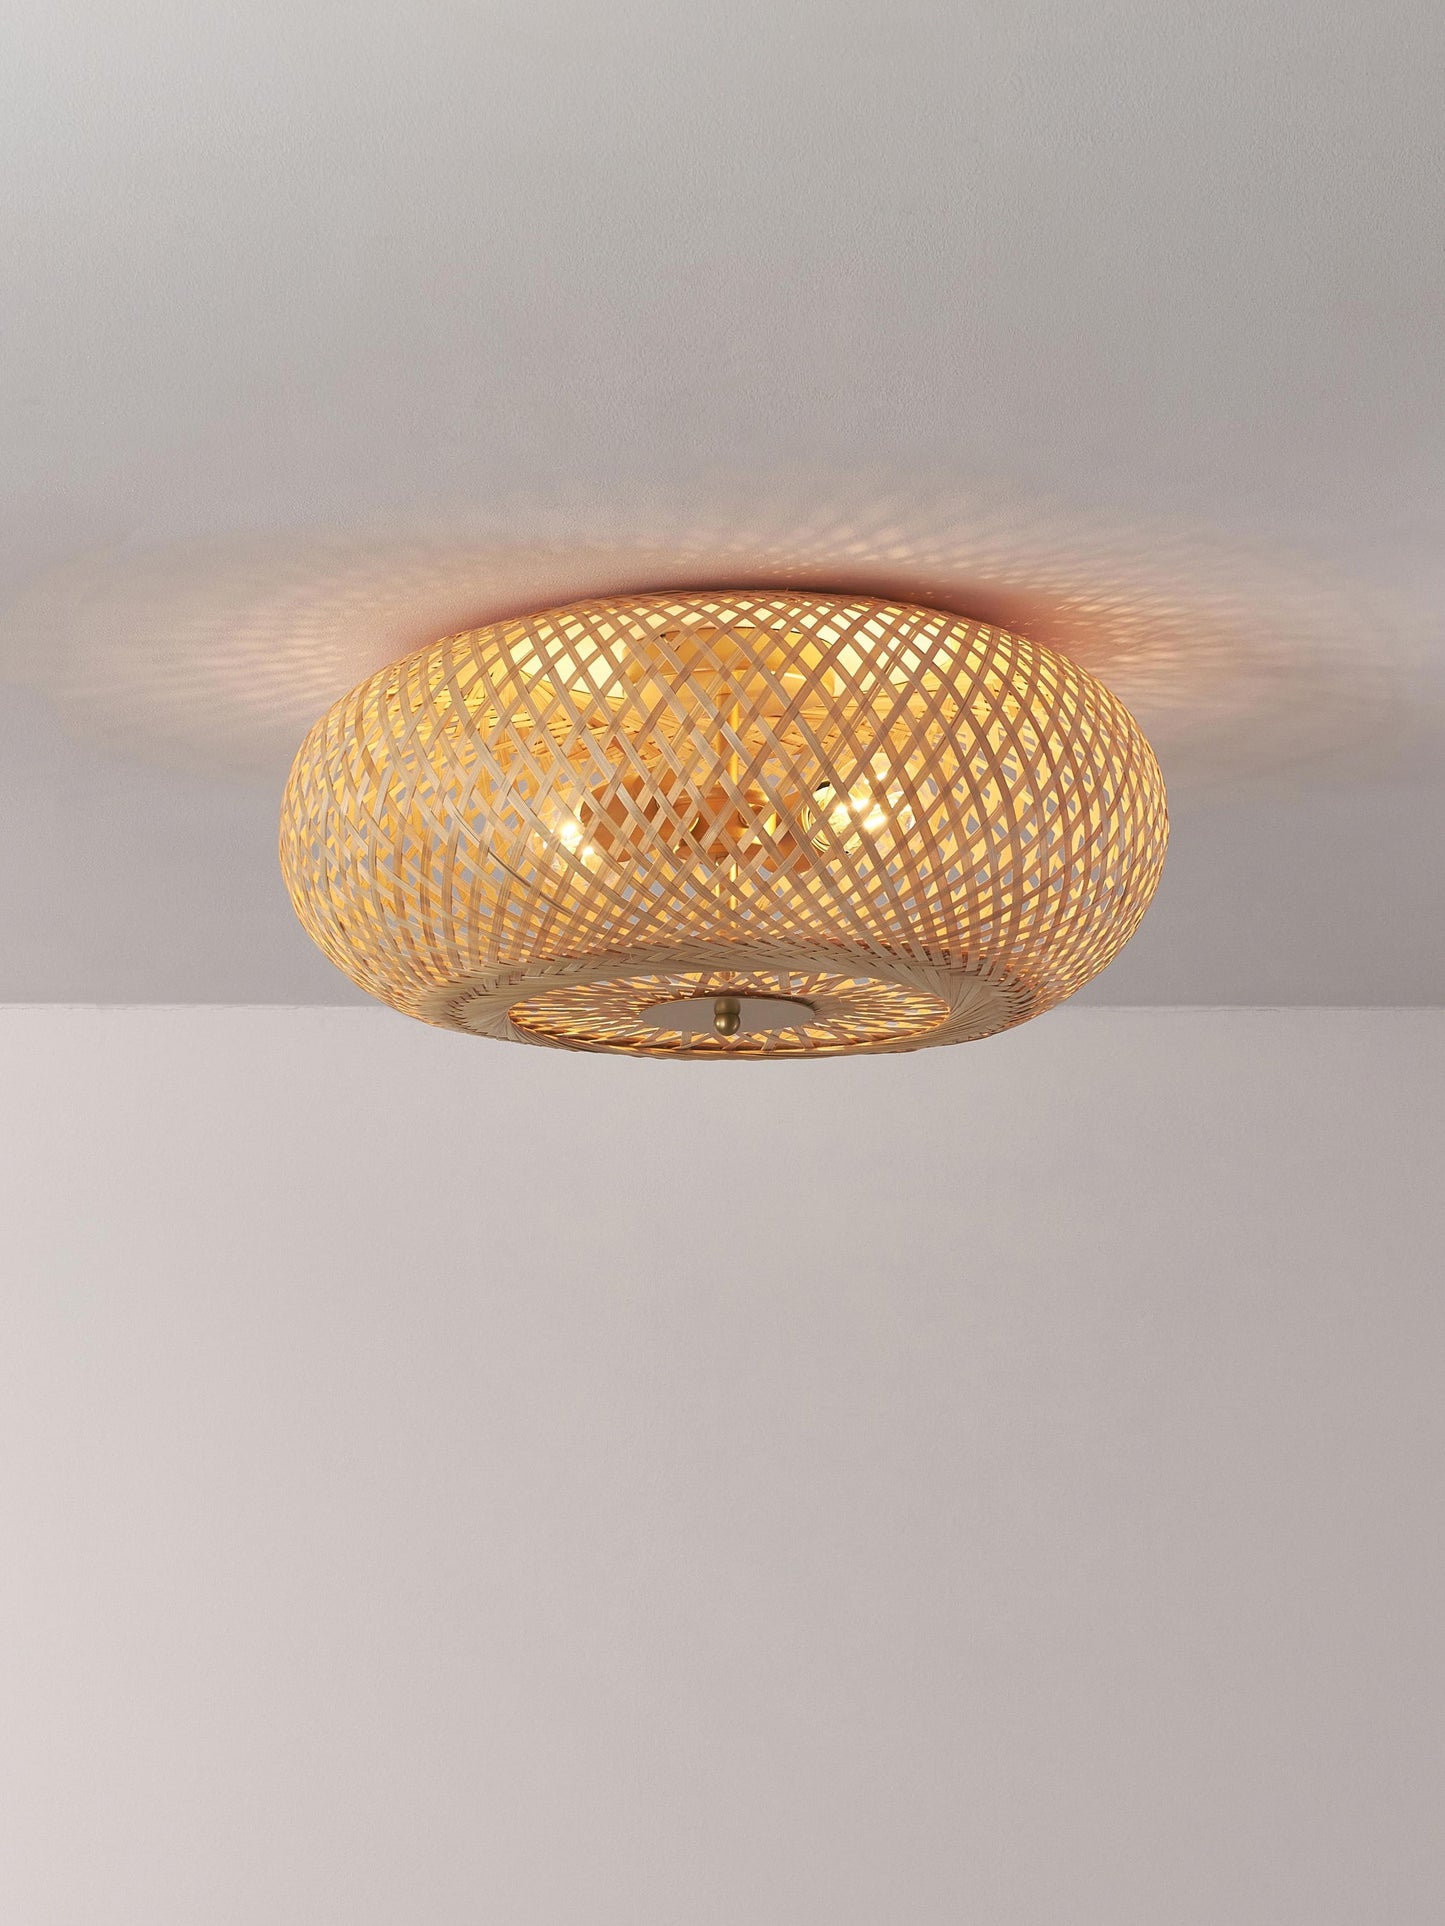 Bamboo Hanging lamp for Living Room | Rattan Pendant light | Cane ceiling light - Shyla - Akway